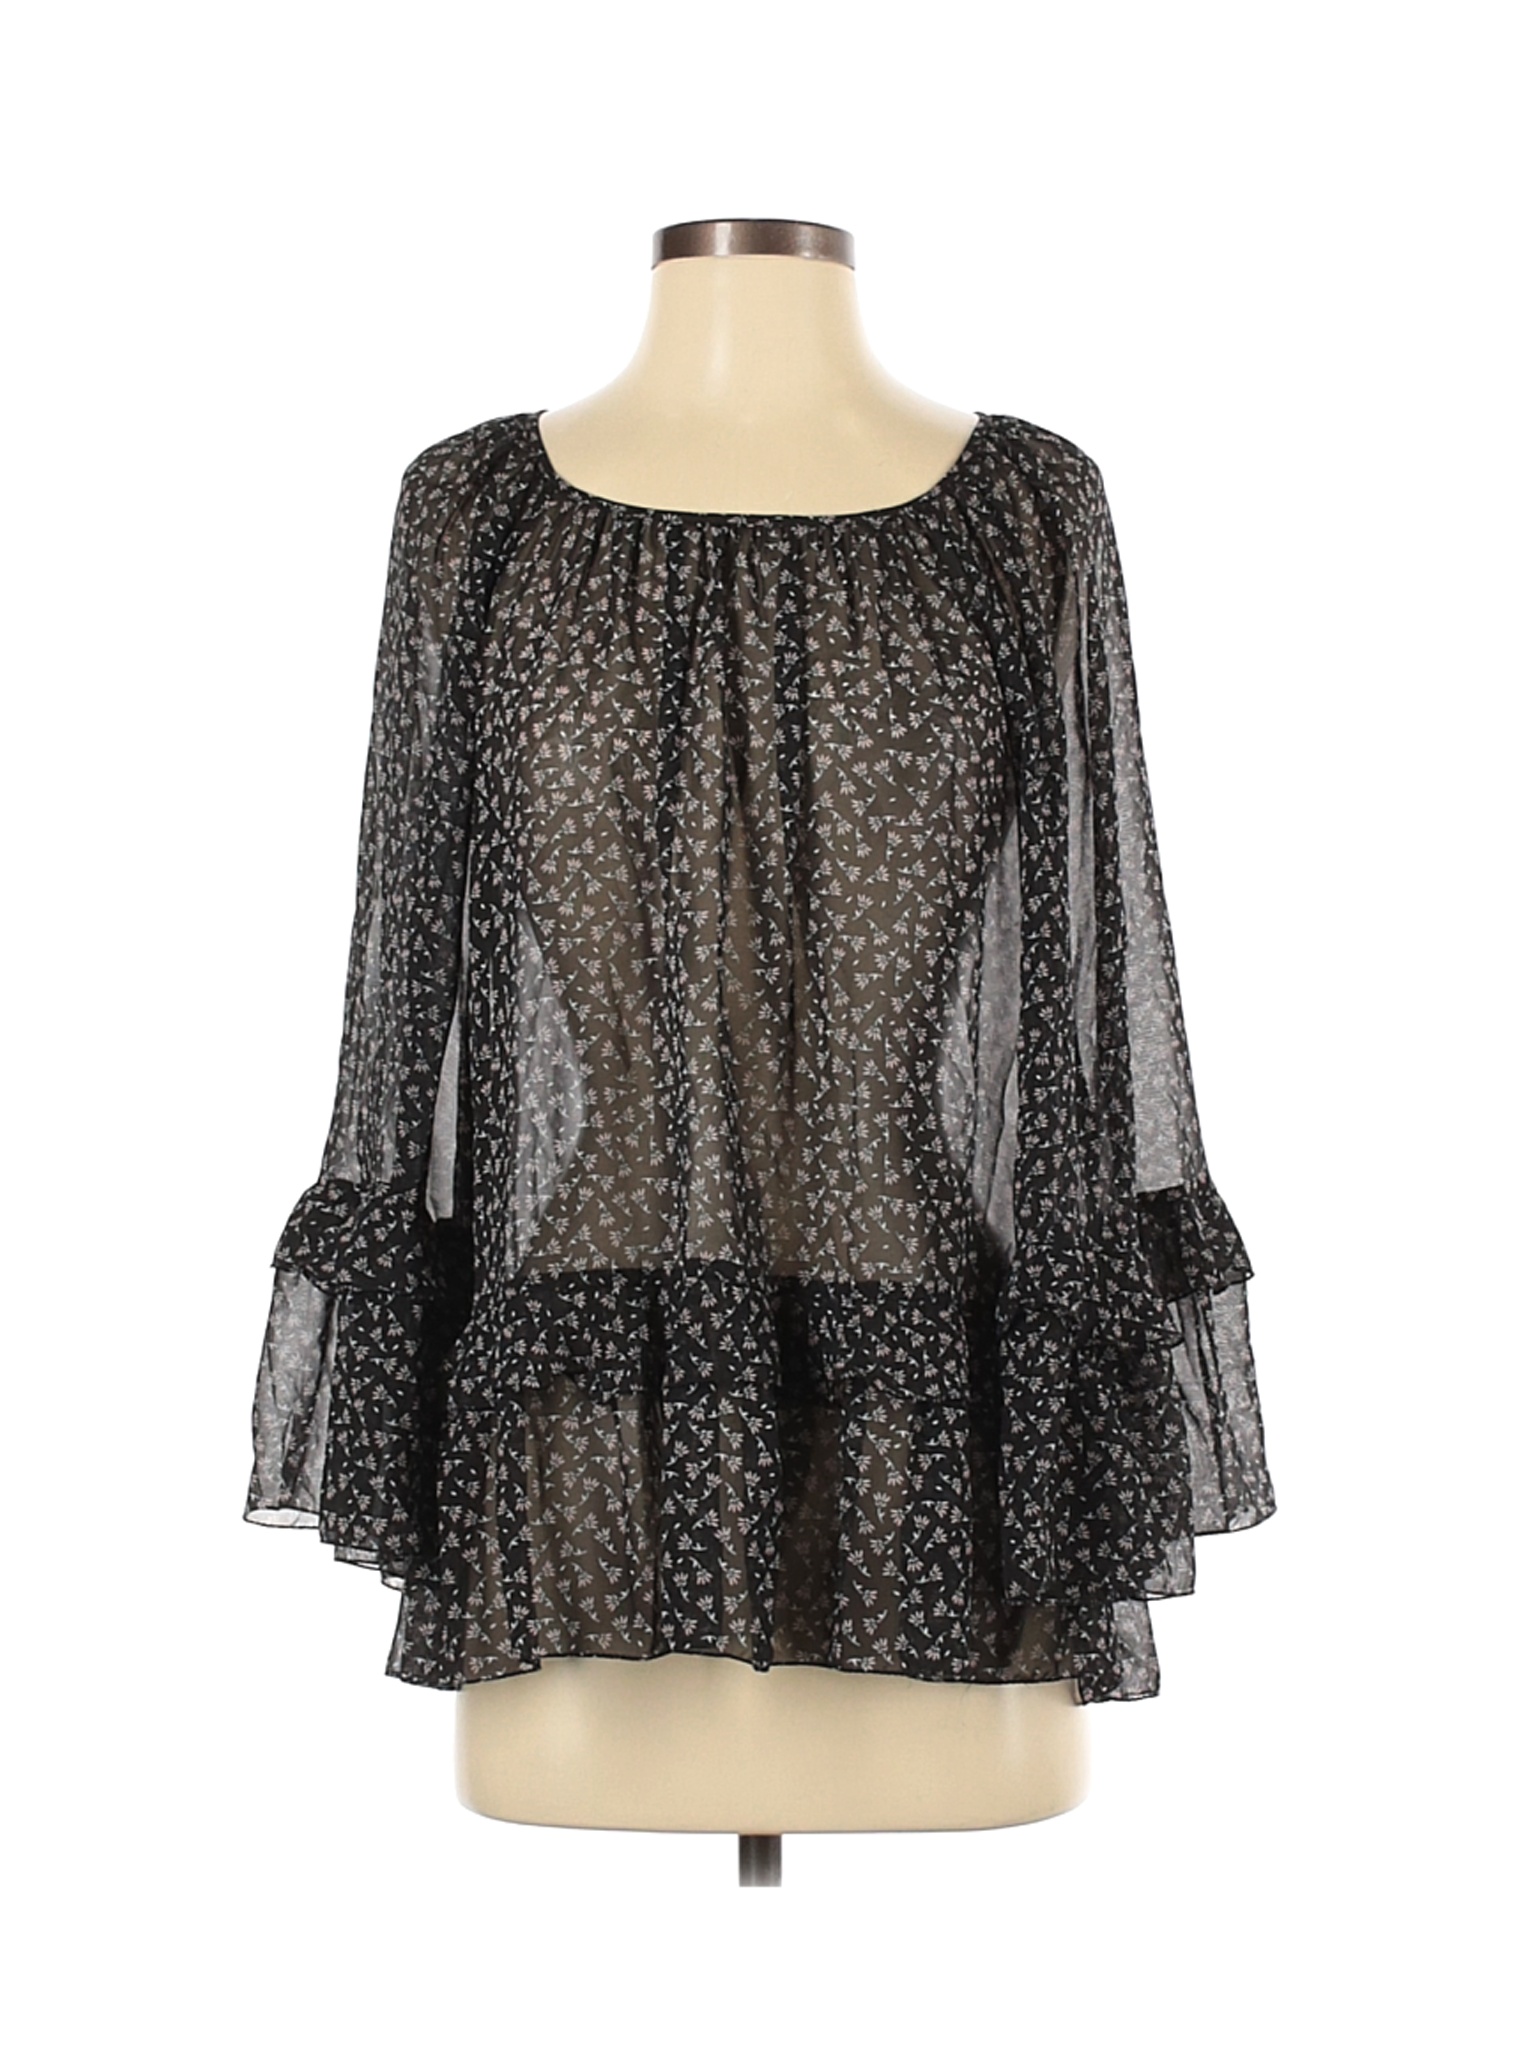 Max Studio Women Black Long Sleeve Blouse S | eBay